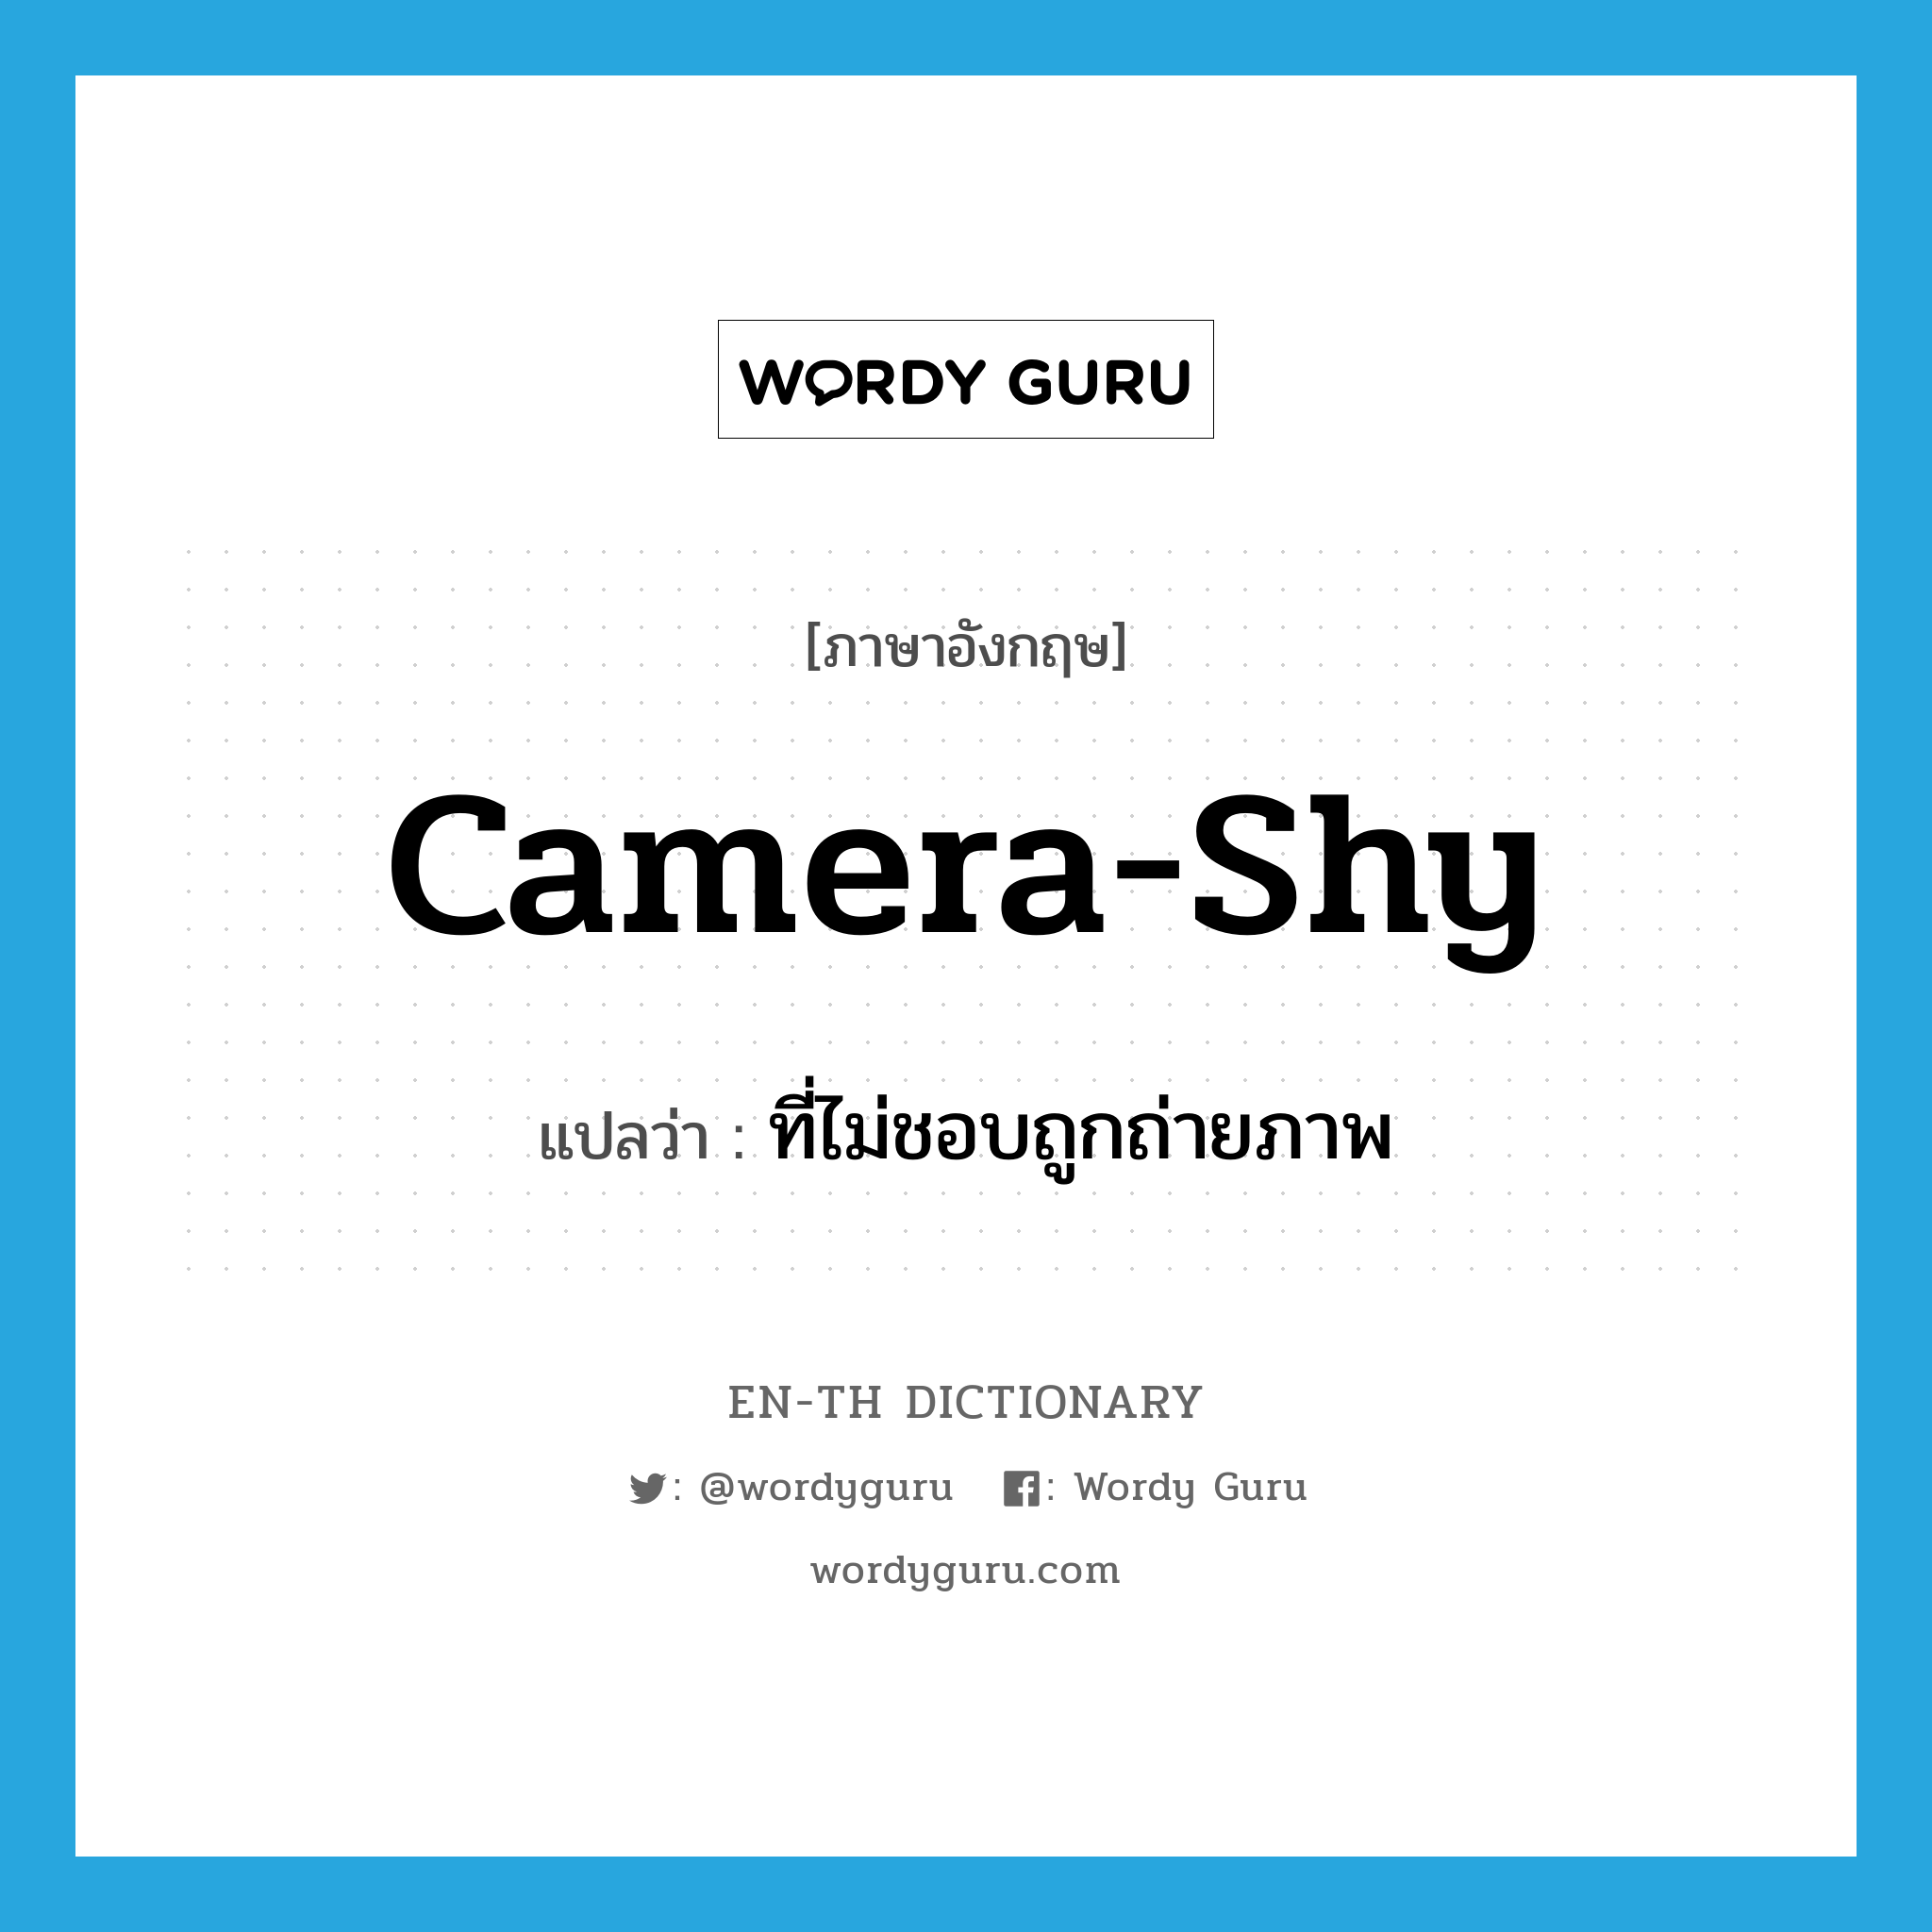 camera-shy